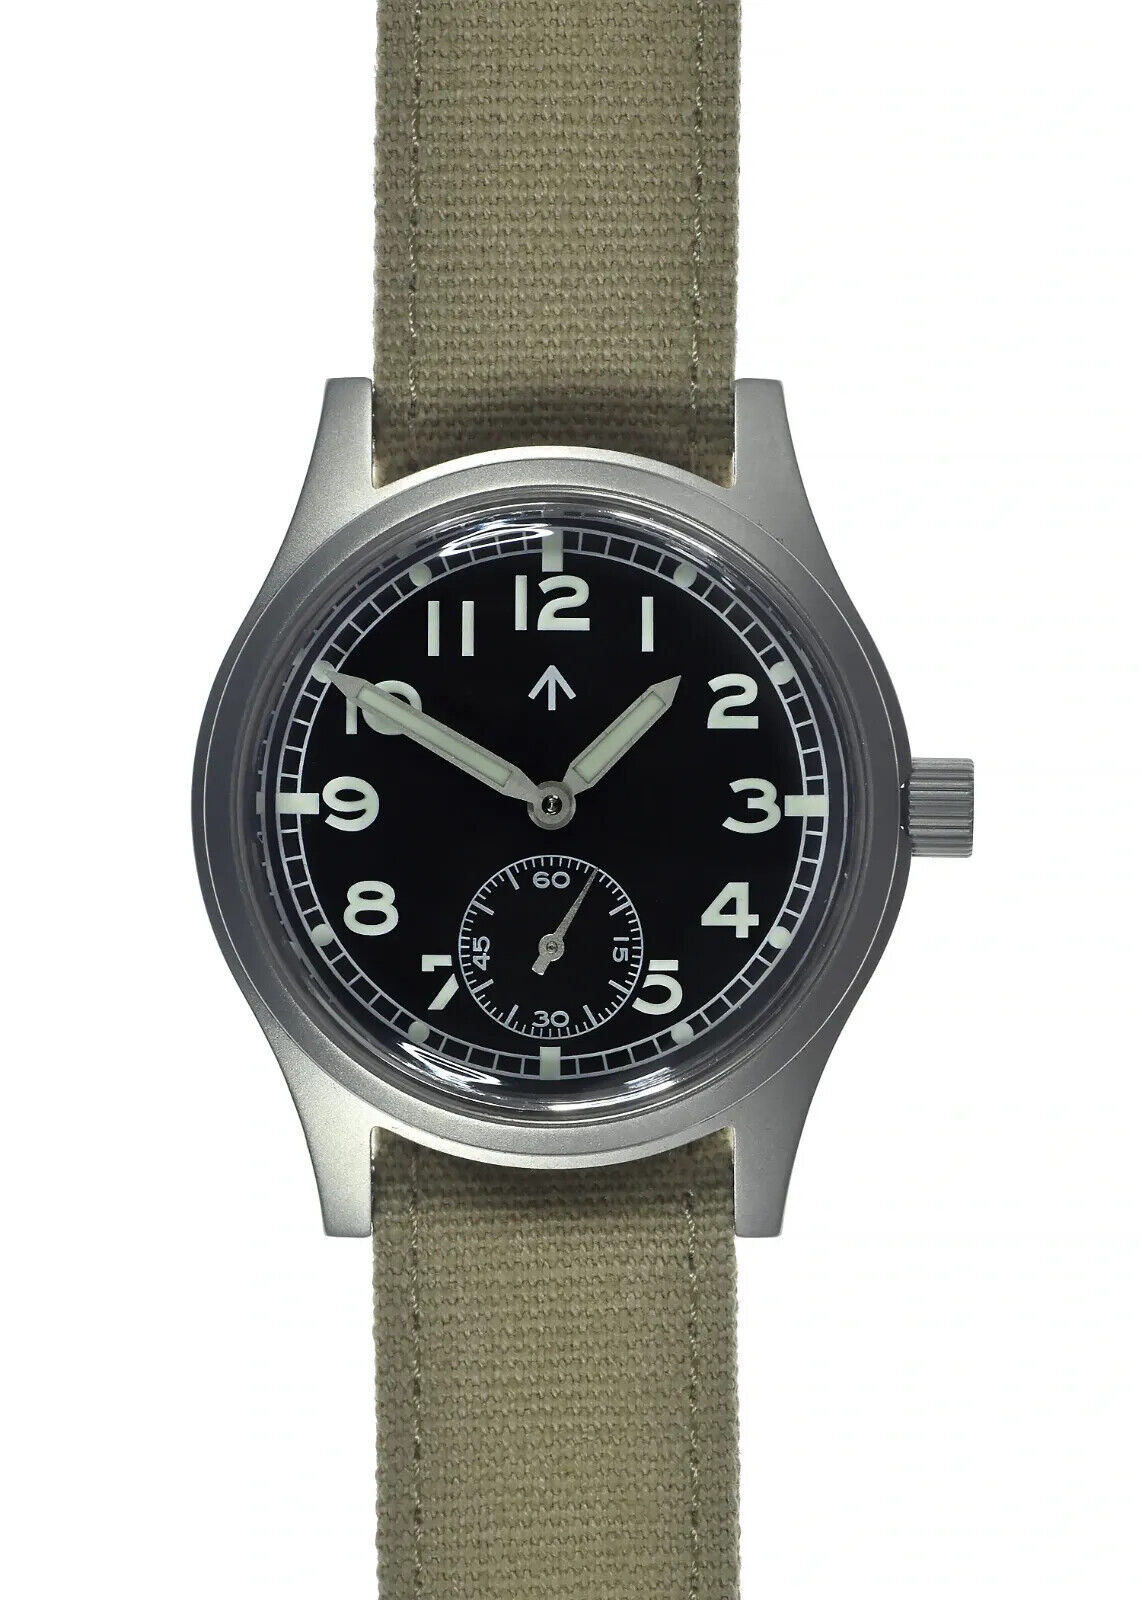 MWC 1940s/1950s "Dirty Dozen" Pattern General Service Swiss Automatic Watch Retro Lume 21 Jewel